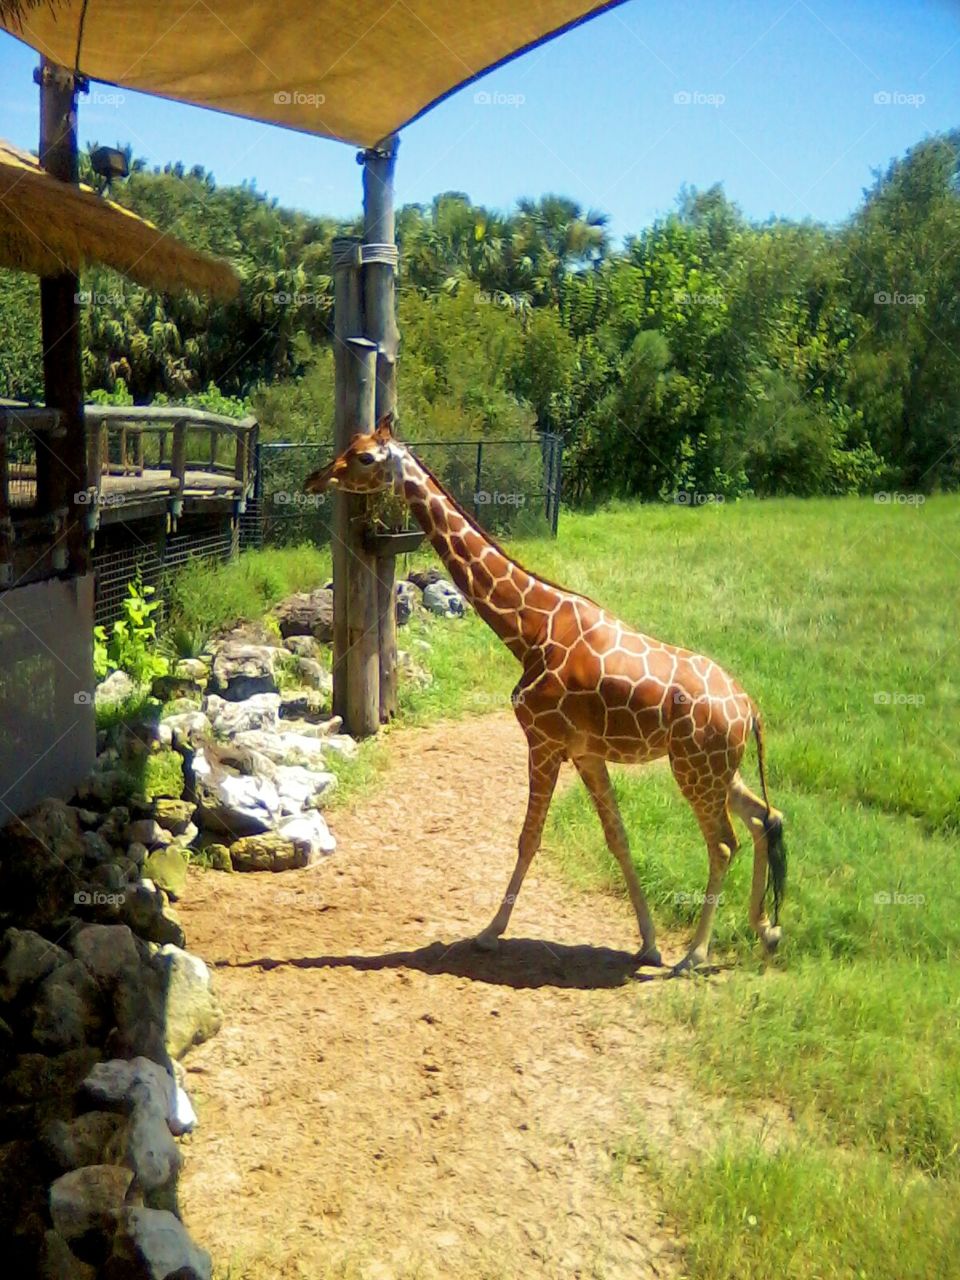 Feed the giraffe